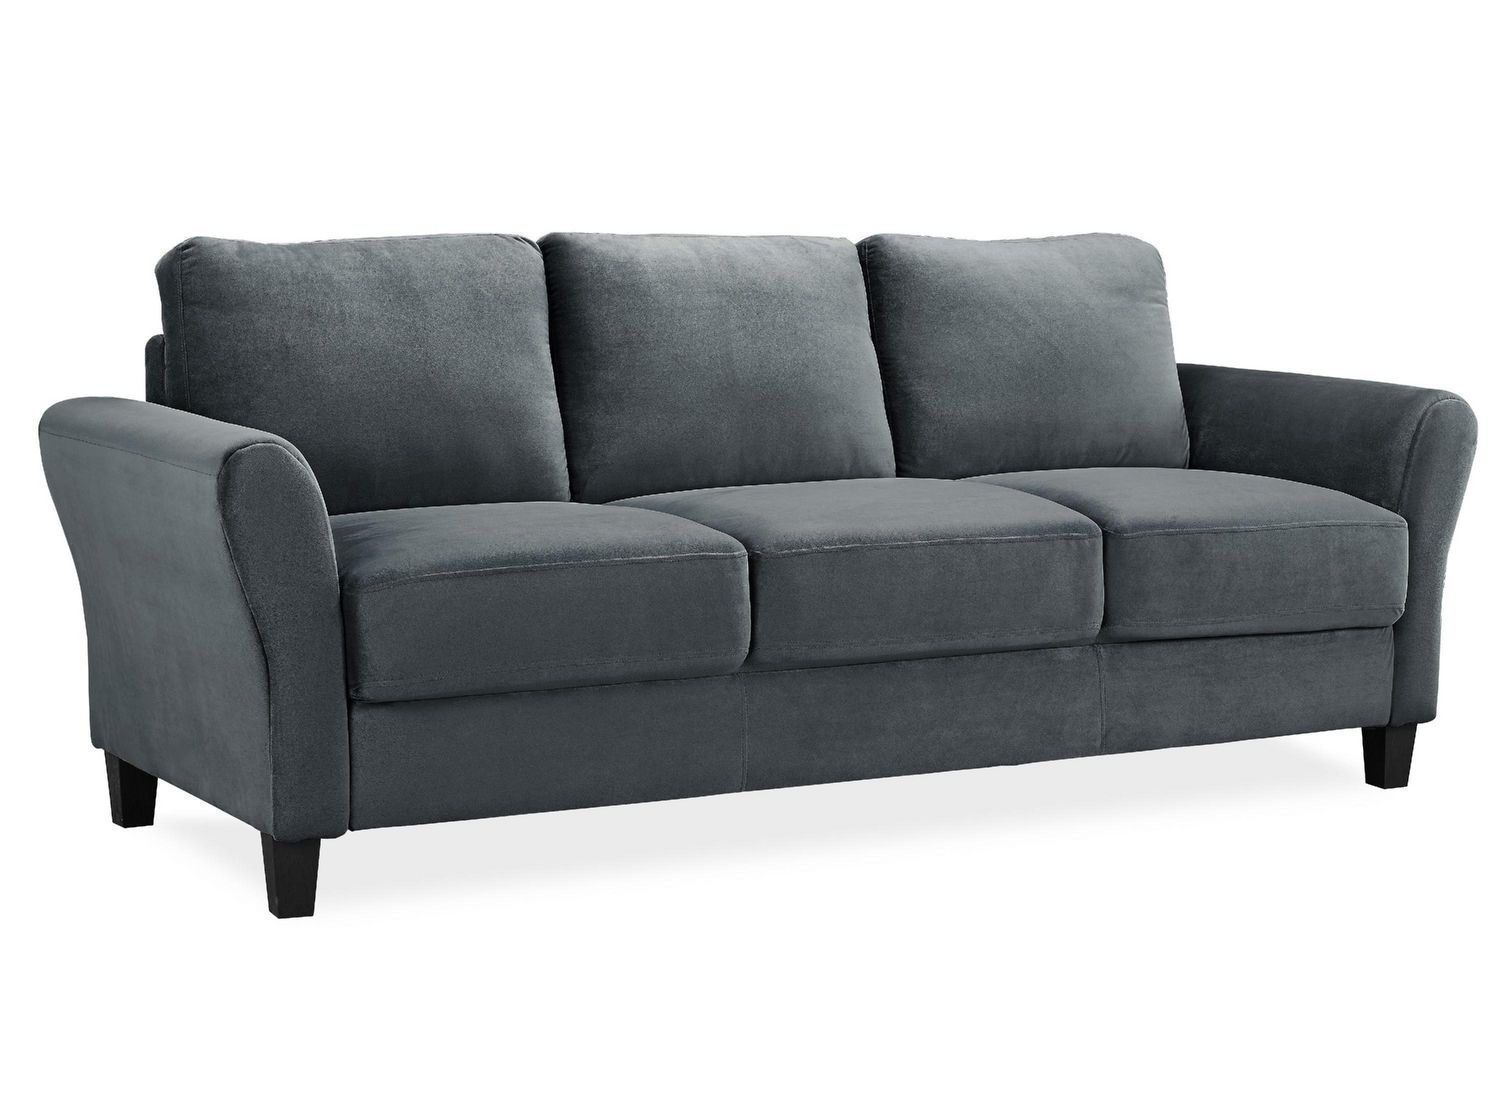 lifestyle solutions lexington sofa bed